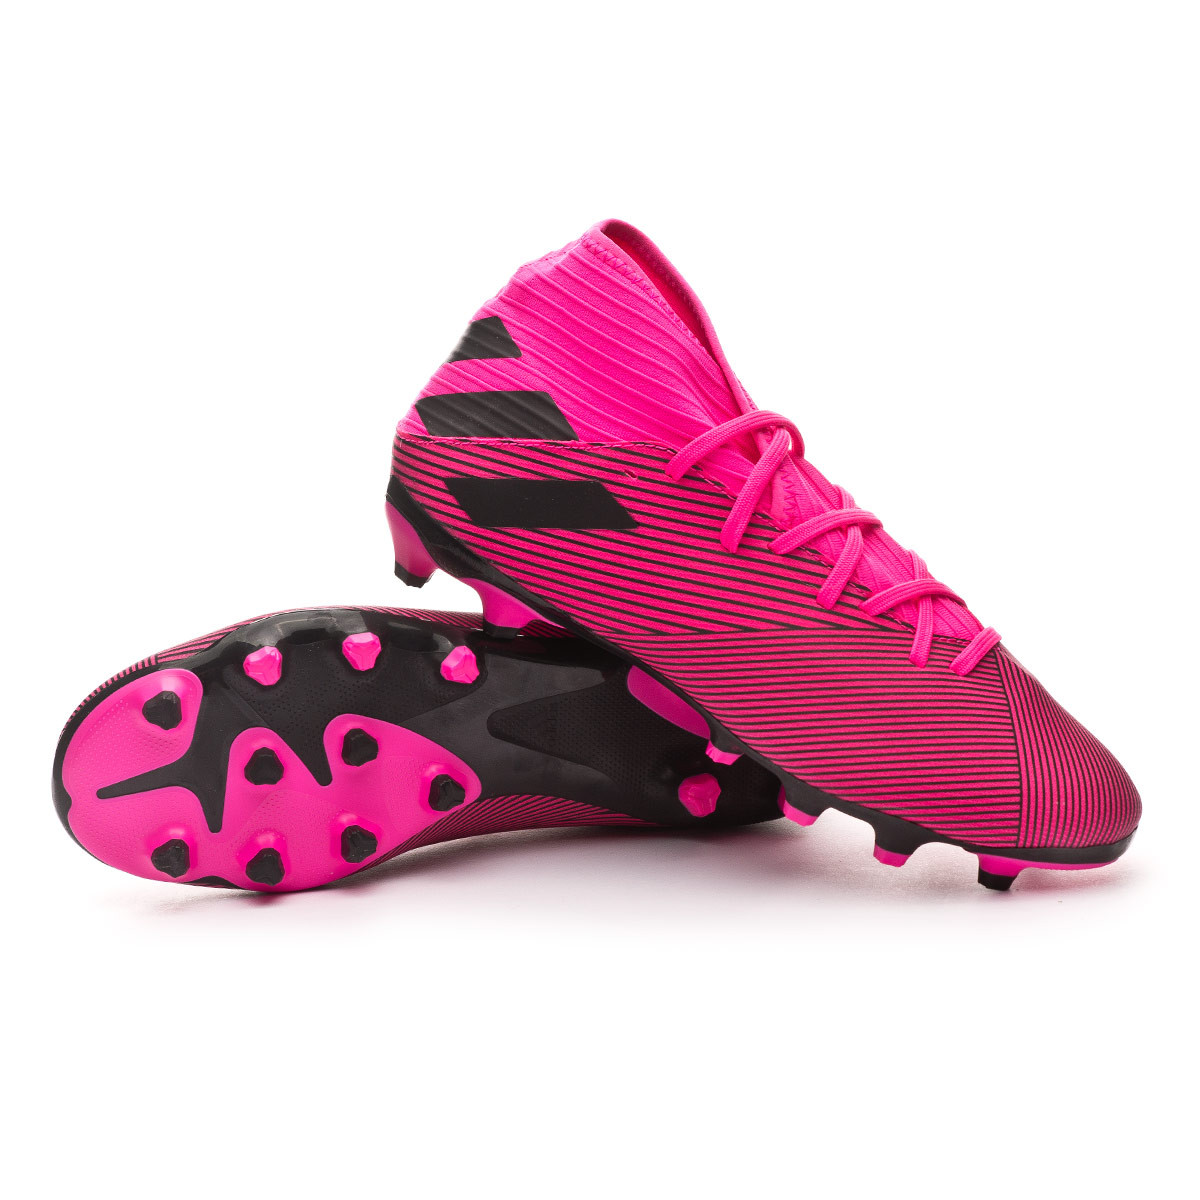 Football Boots adidas Nemeziz 19.3 MG Shock pink-Core black-Shock pink -  Football store Fútbol Emotion